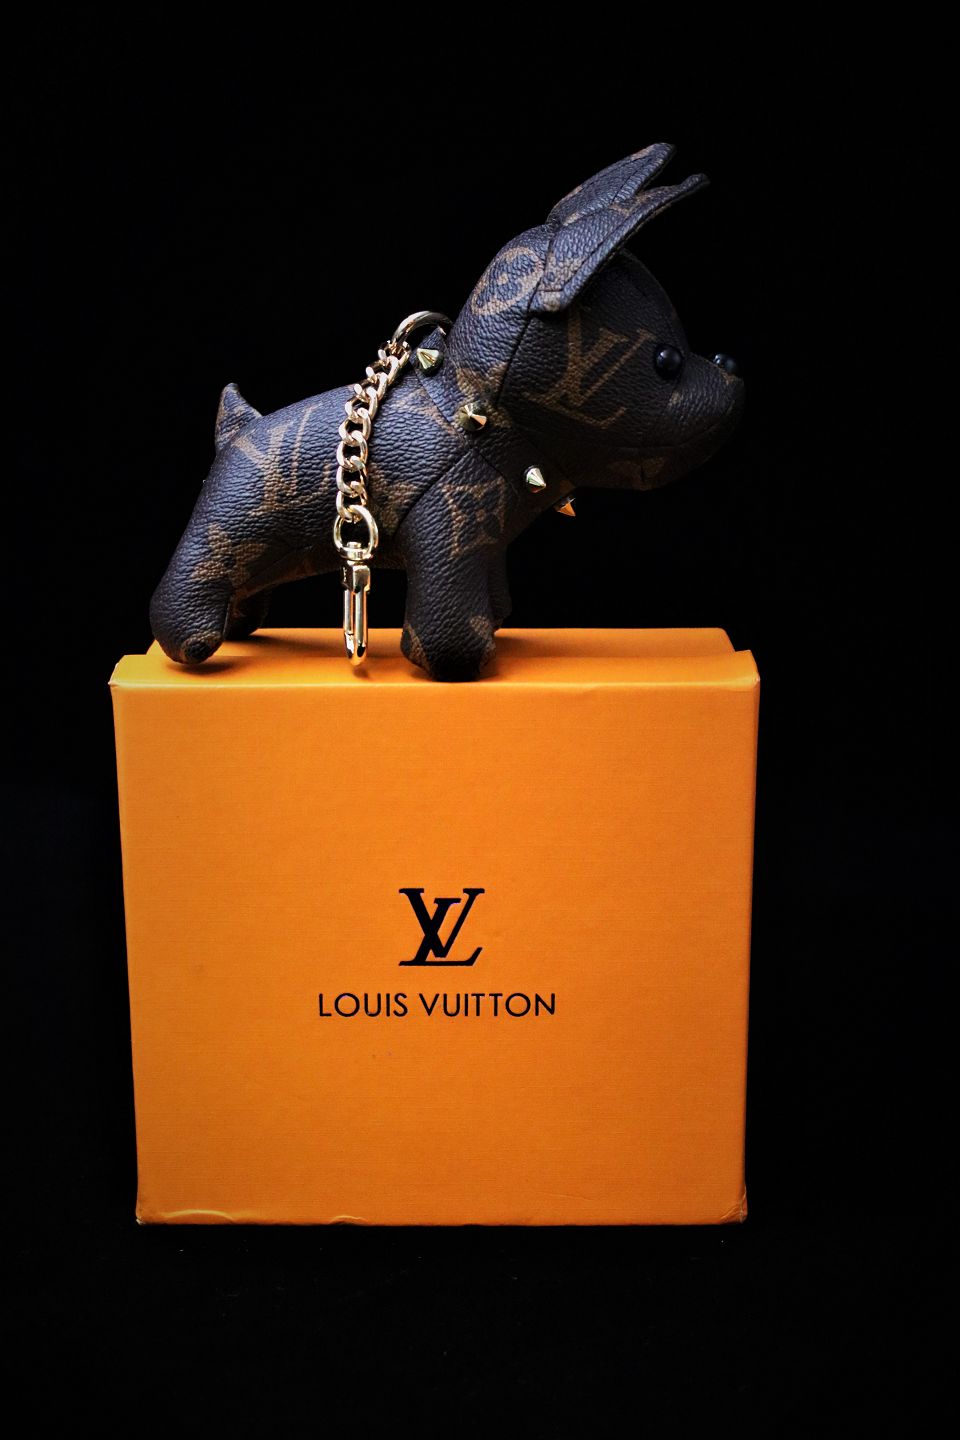 Golden Louis Vuitton danish dog